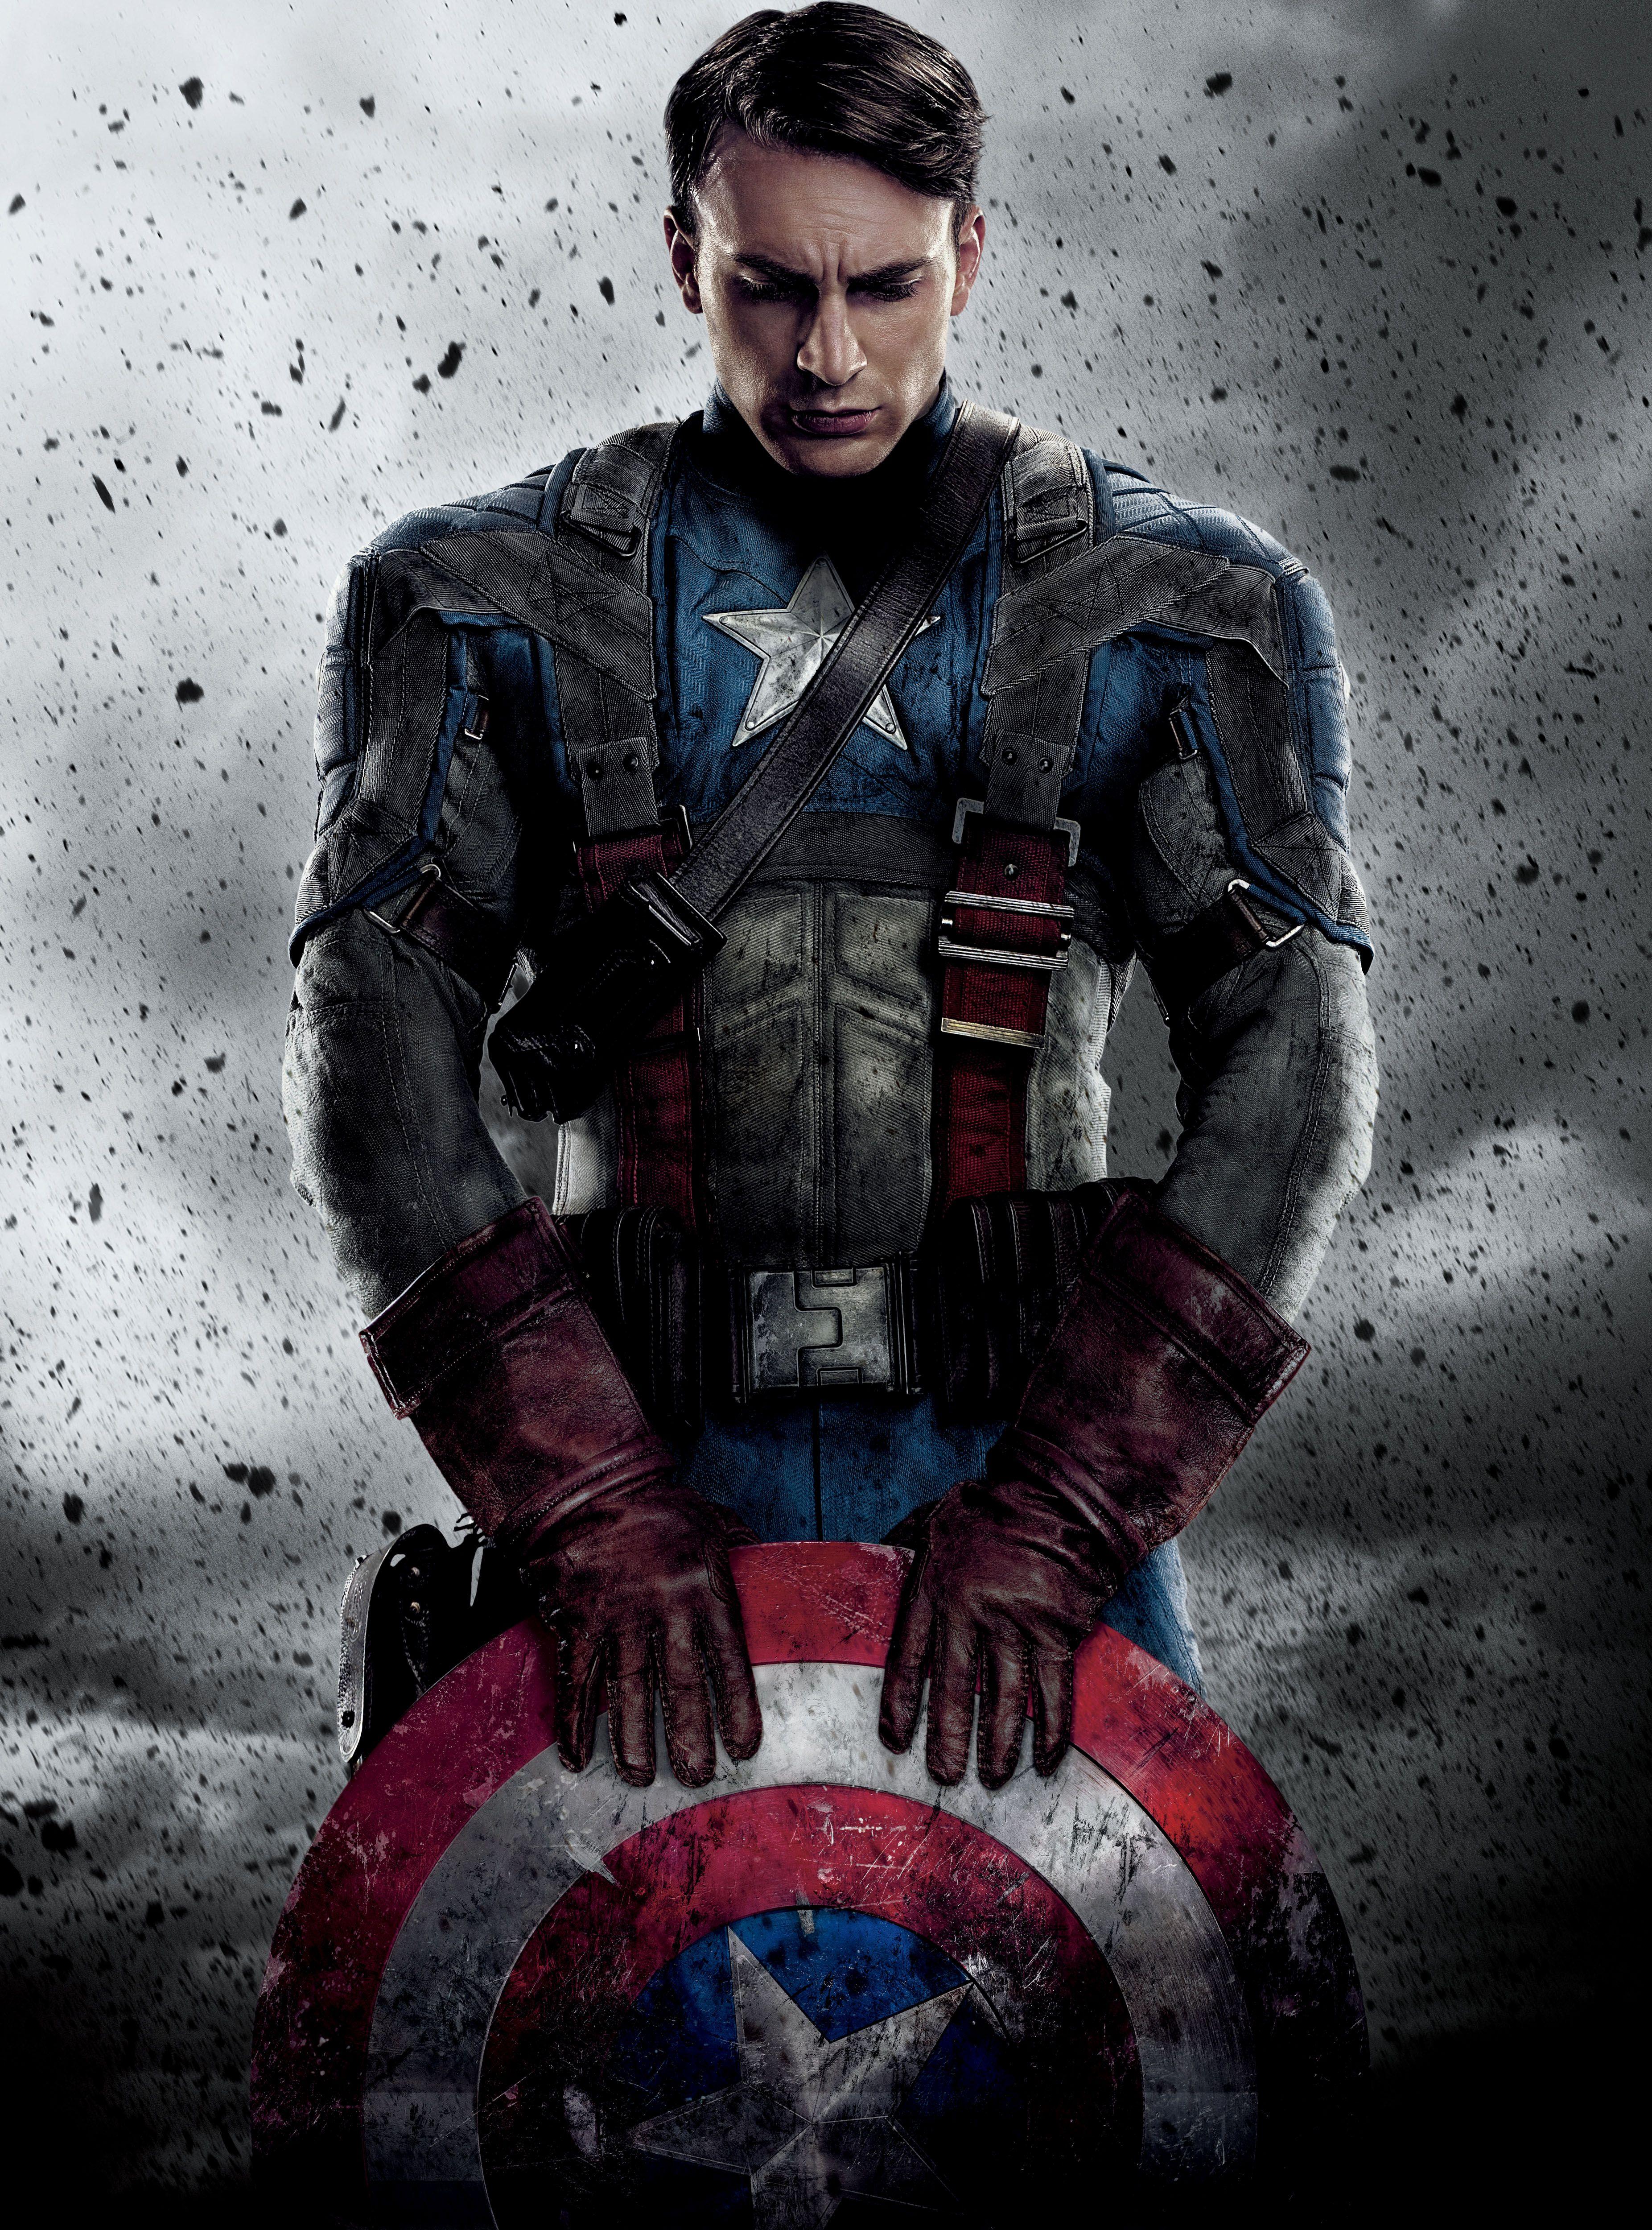 Captain America Image (24)